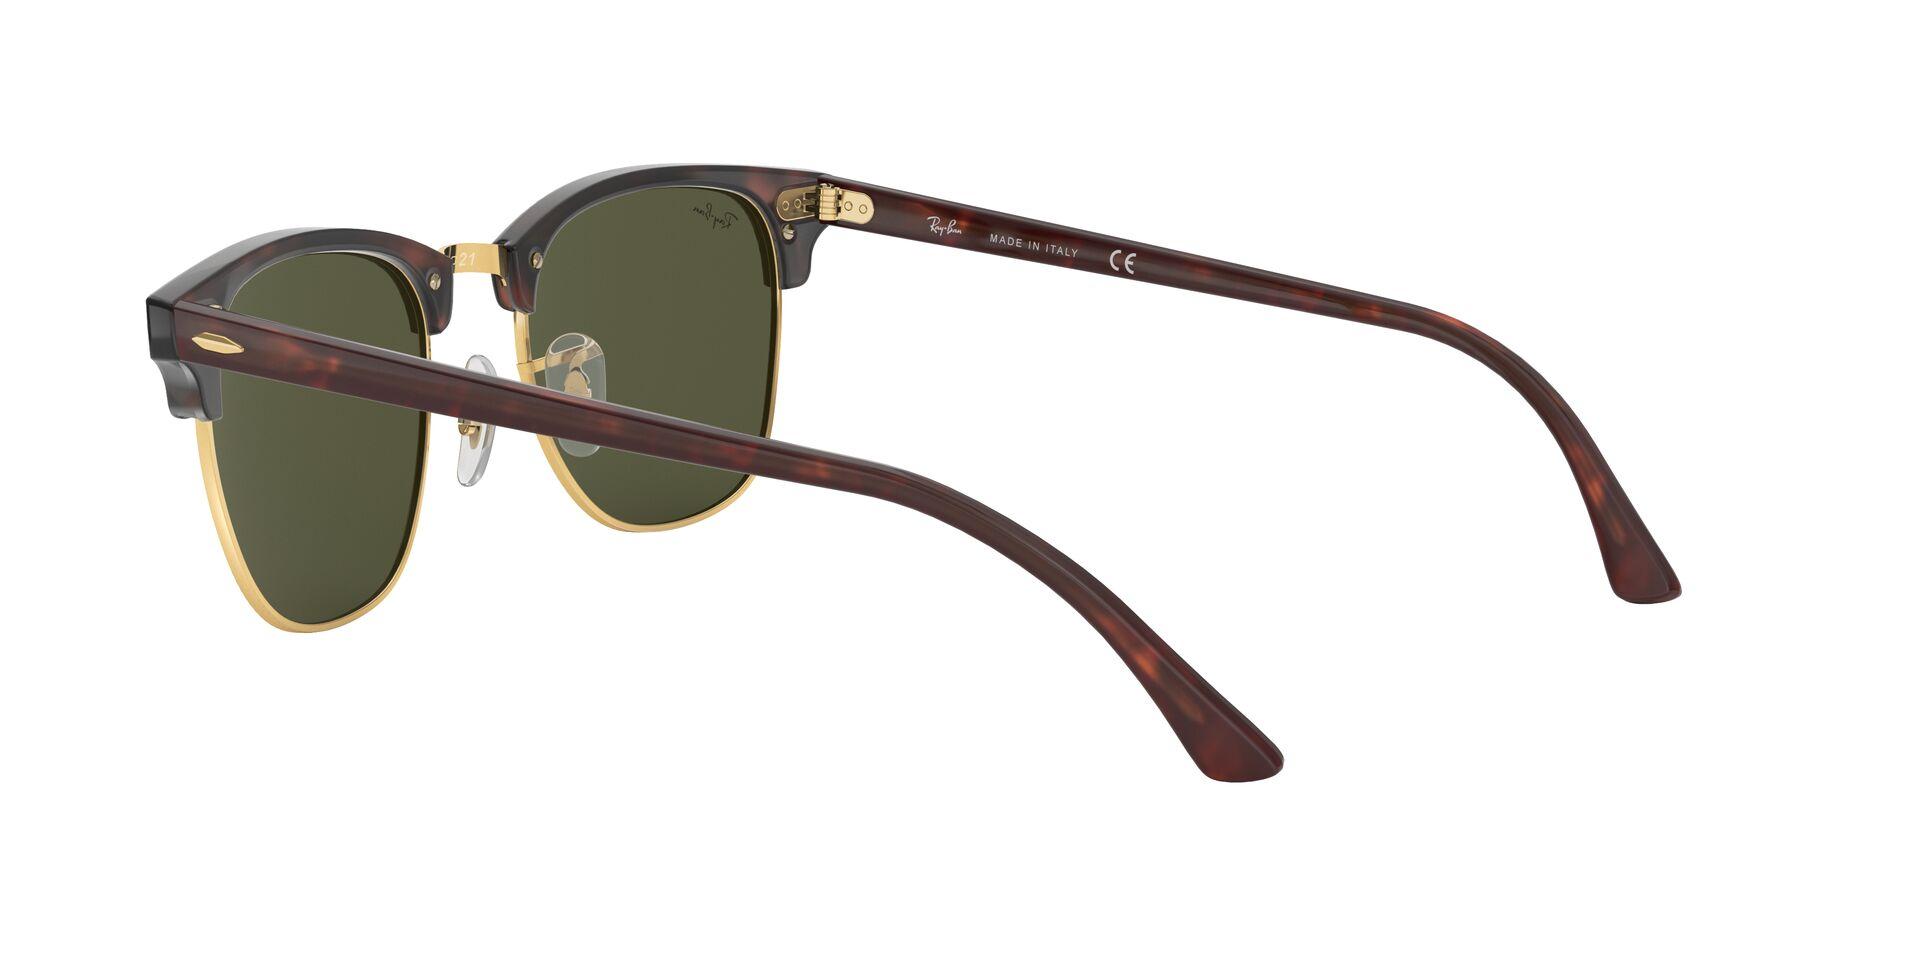 Mắt Kính RAY-BAN CLUBMASTER - RB3016F W0366 -Sunglasses